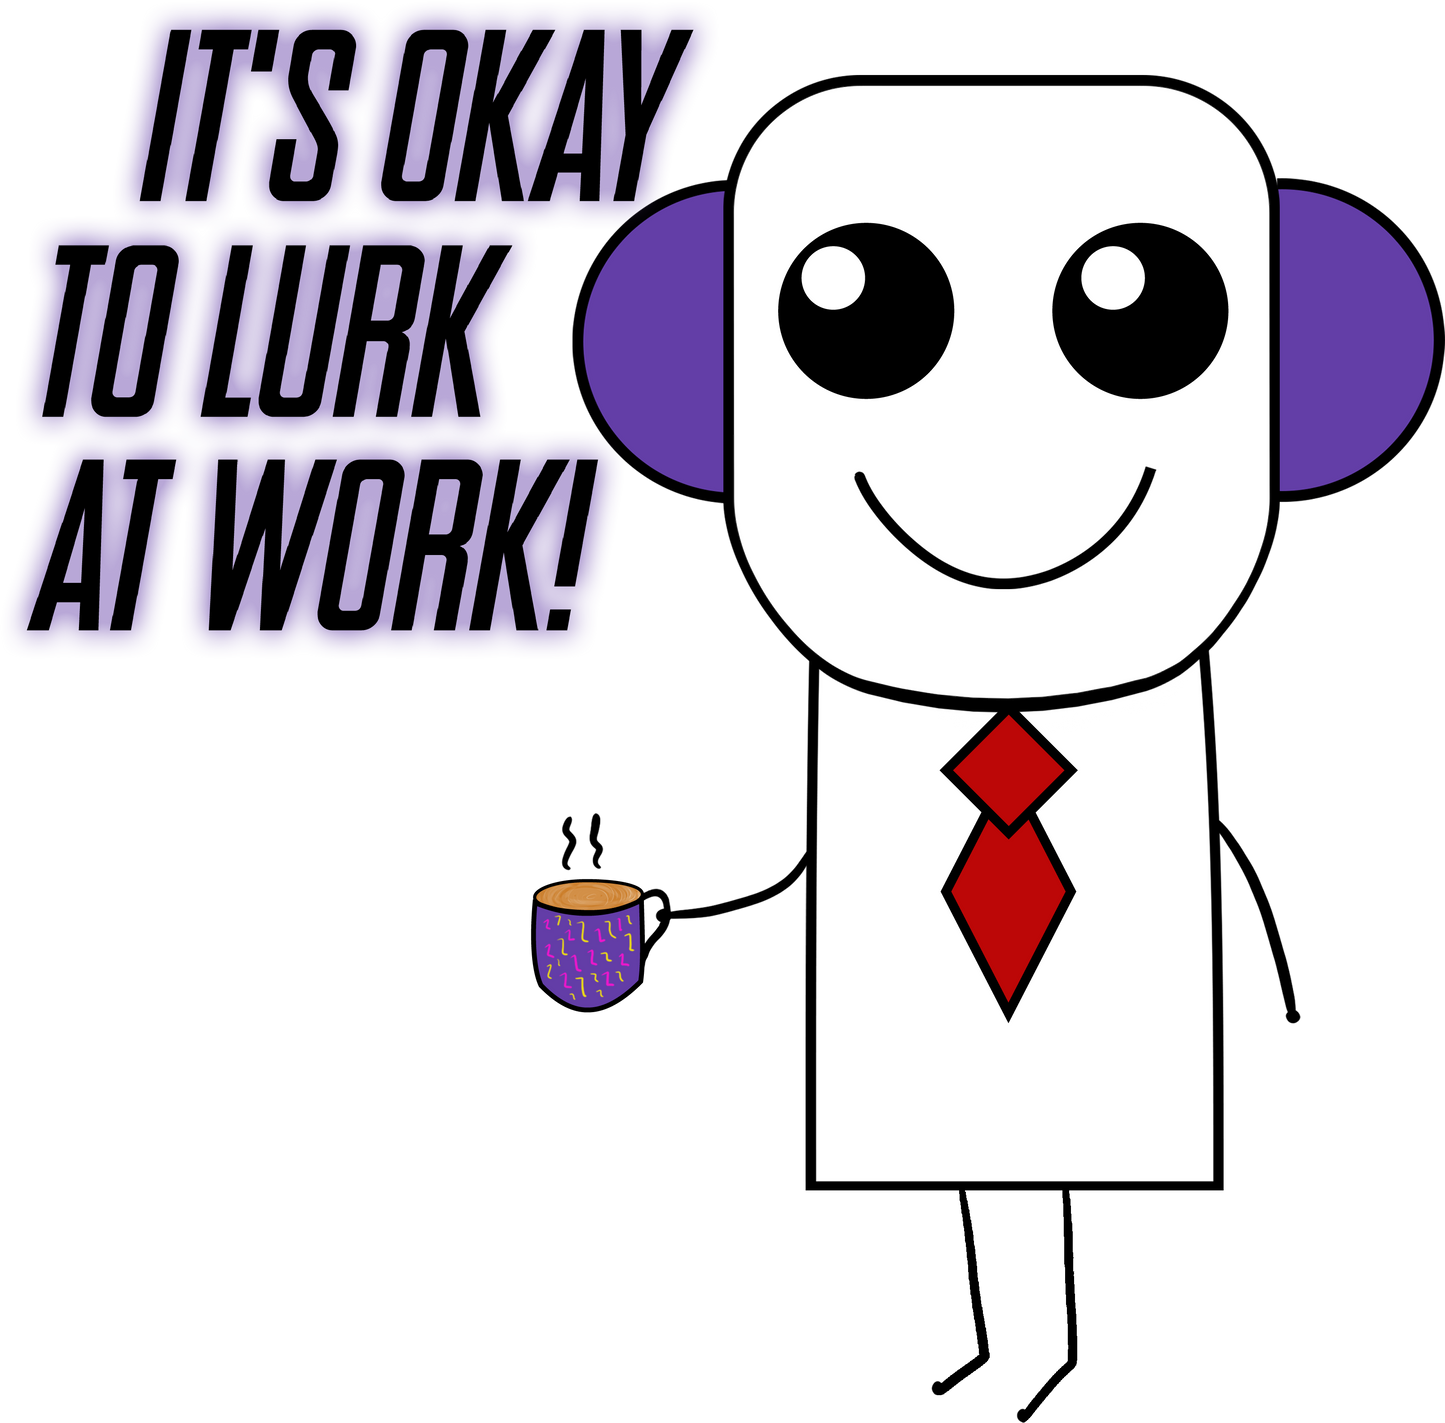 It's Okay To Lurk At Work Keyring